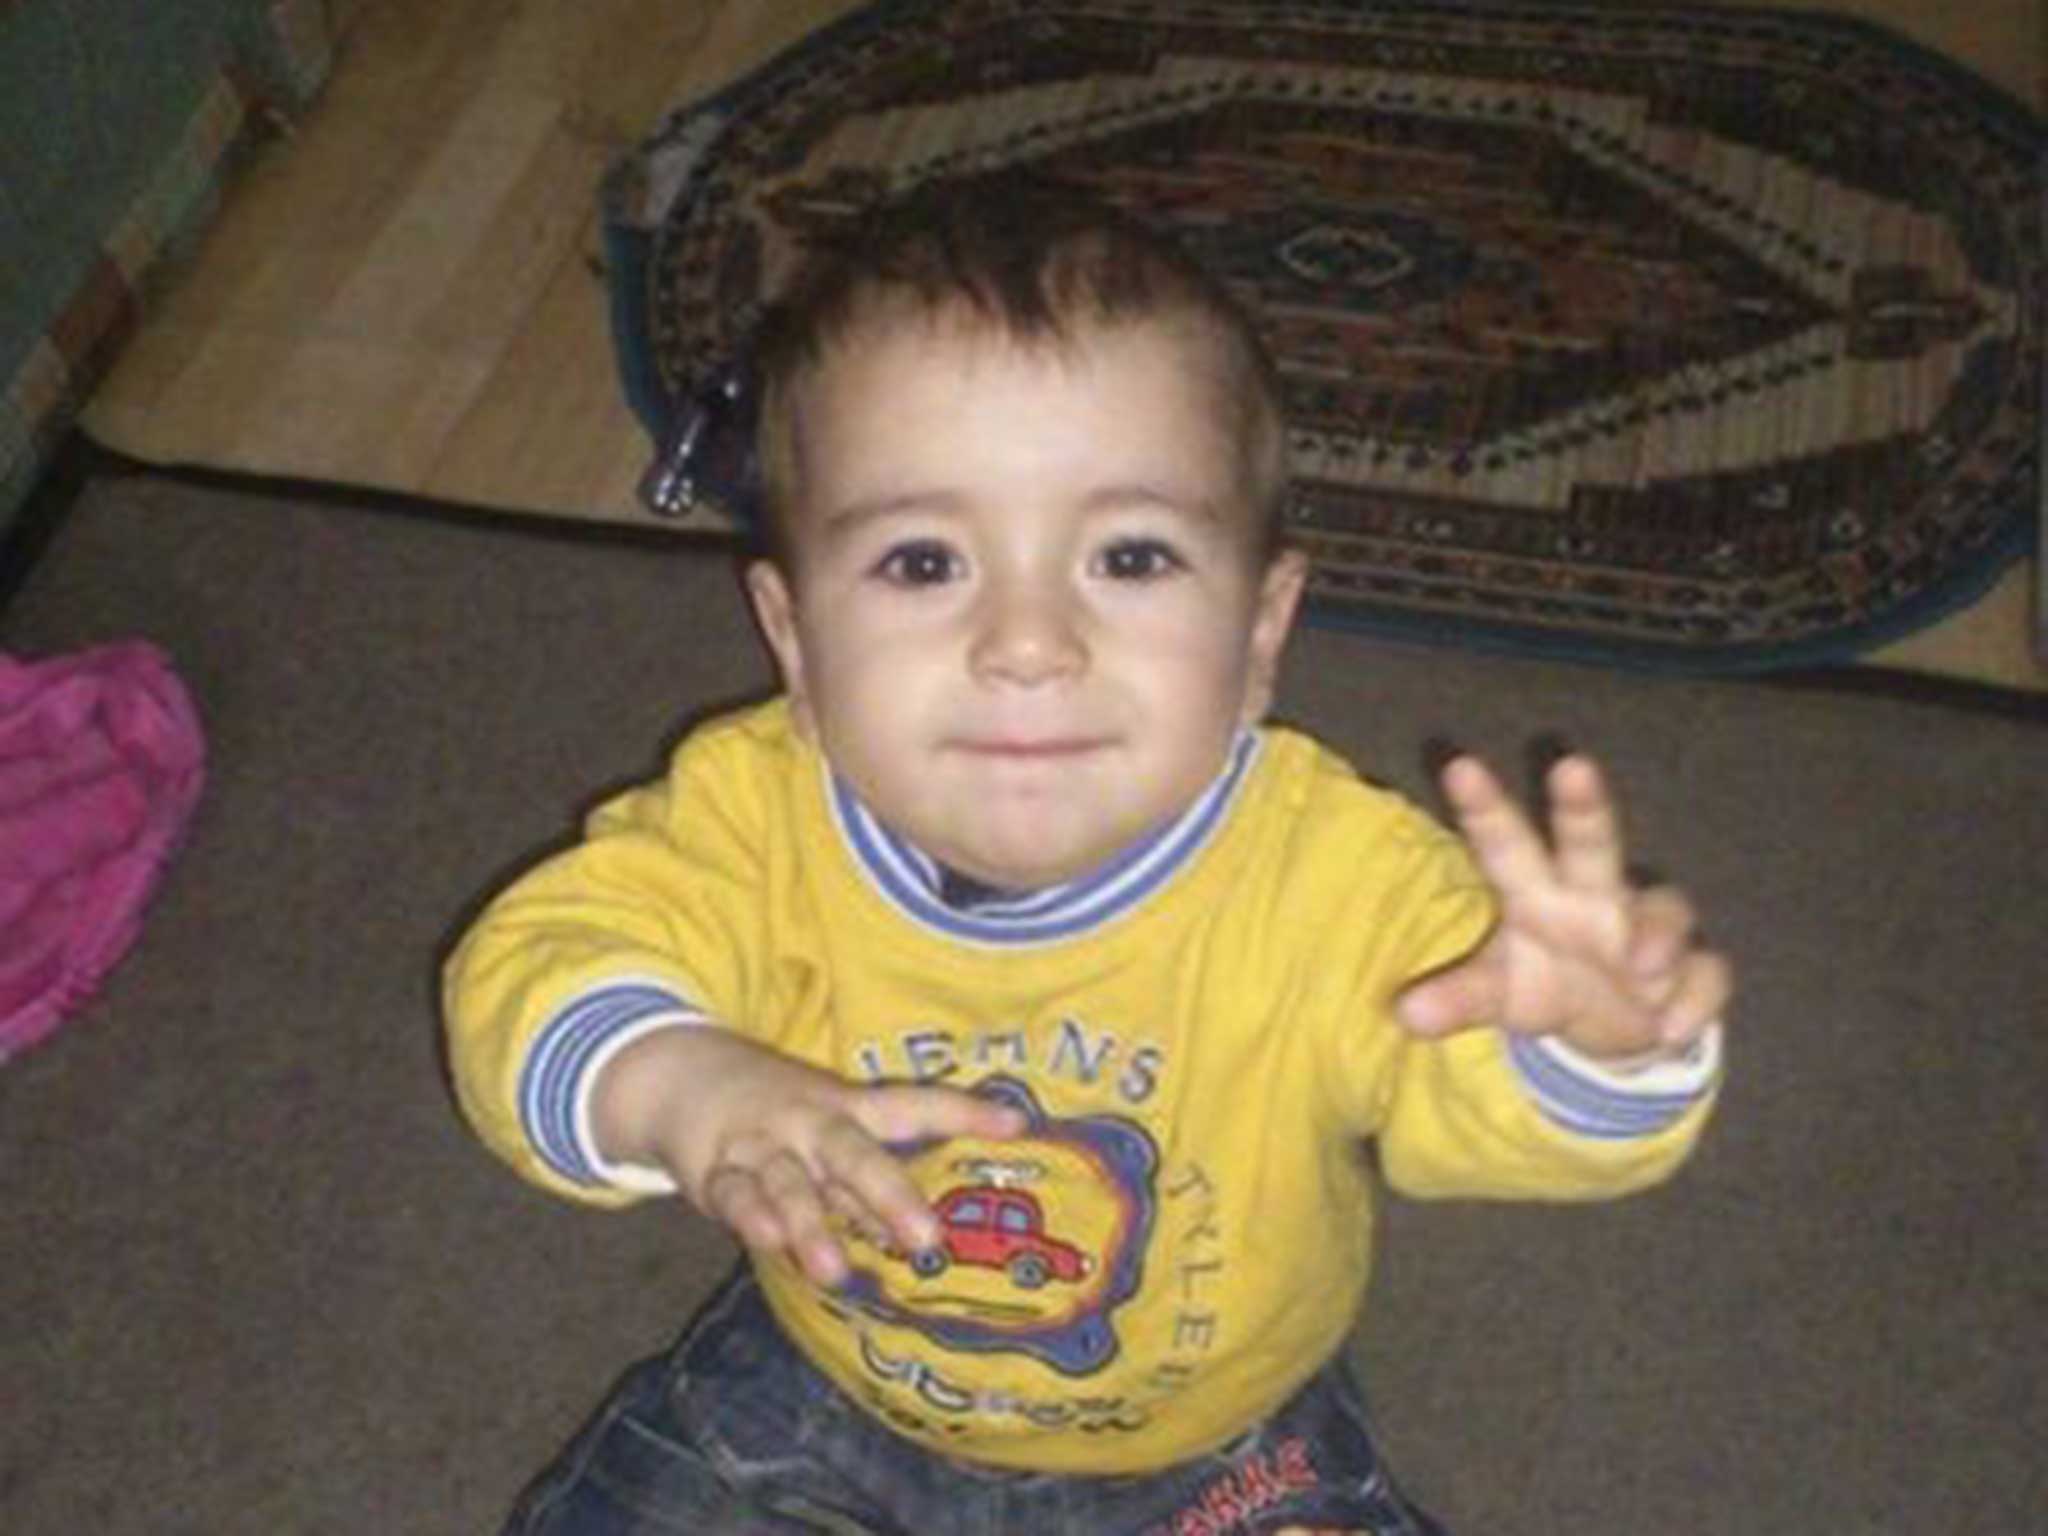 Aylan Kurdi's father, Abdullah Kurdi, said little had changed since his son's death